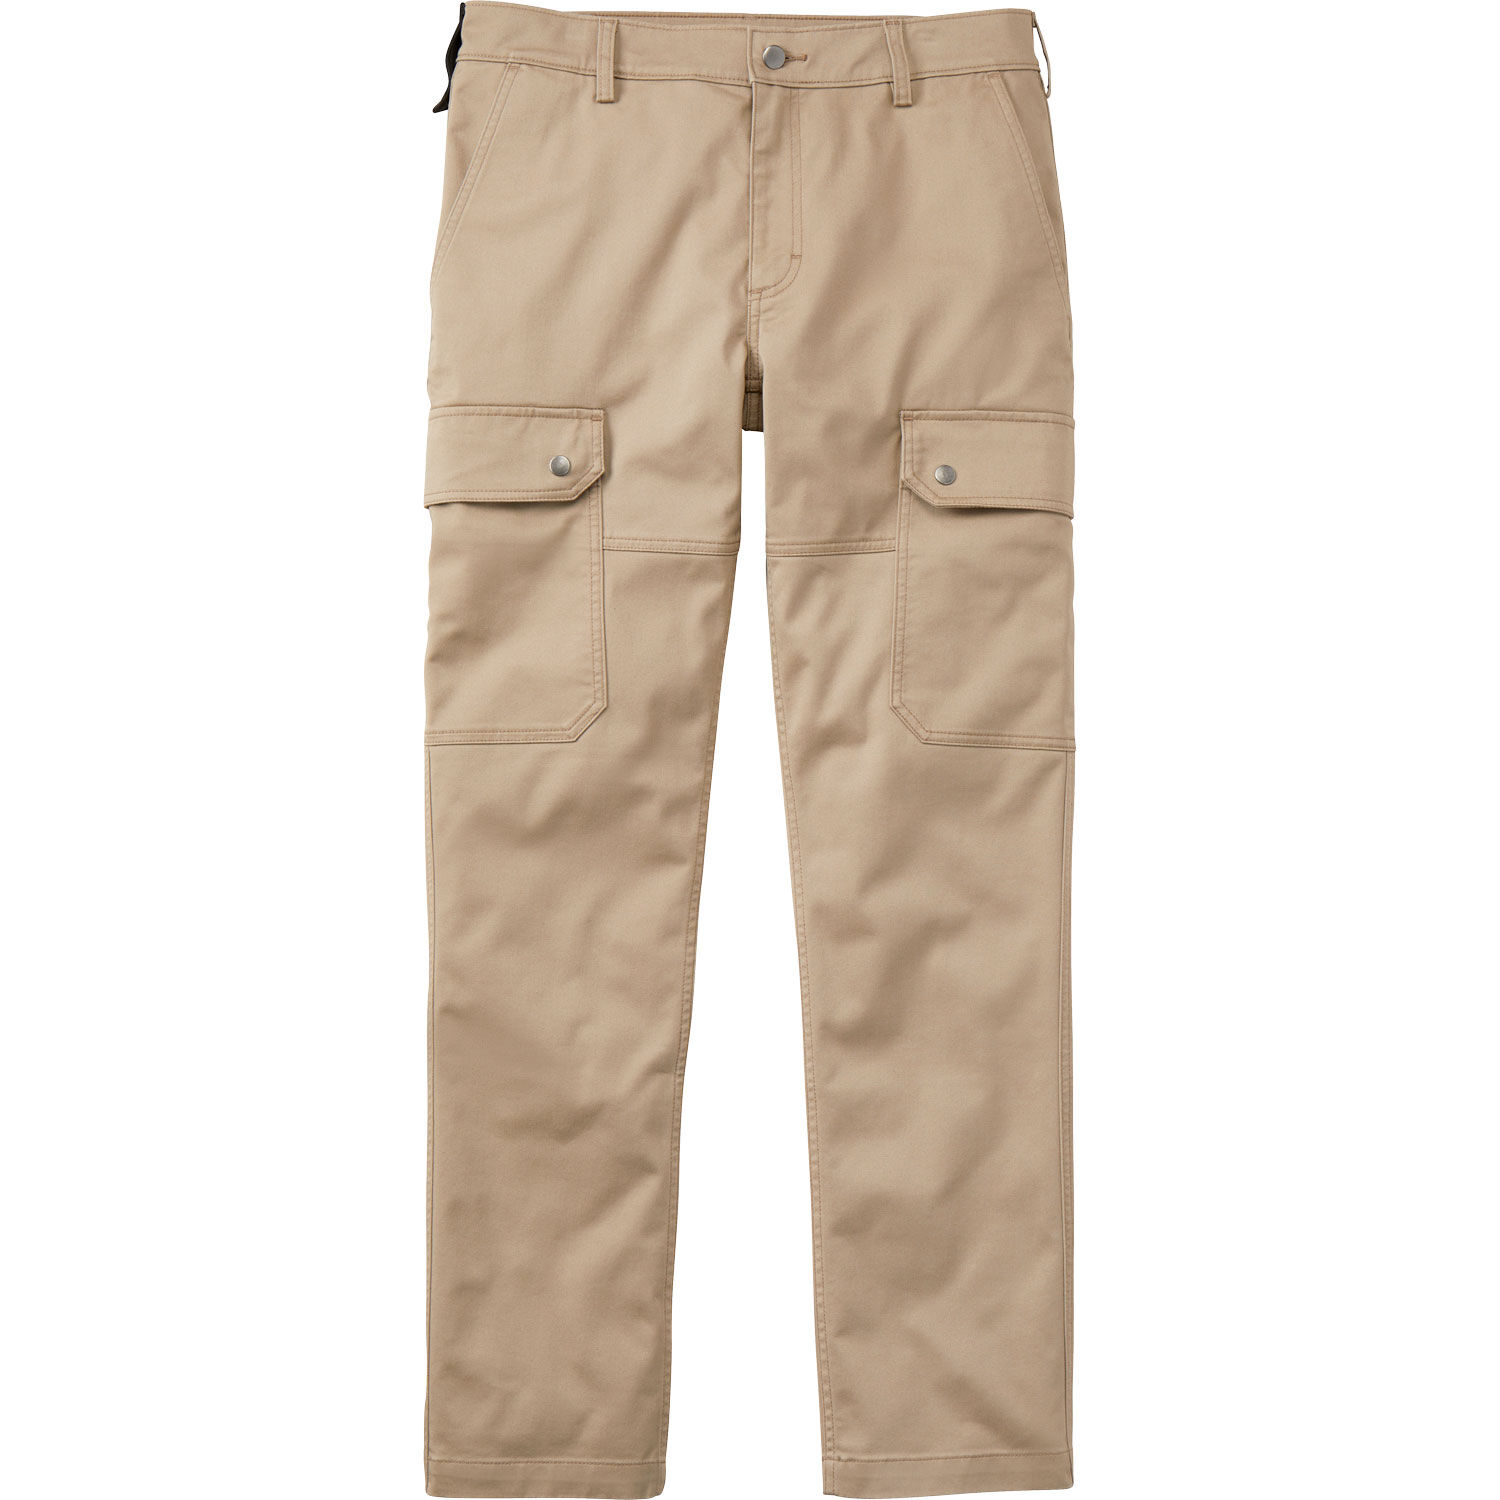 Men's Duluthflex Fire Hose Slim Fit Cargo Work Pants | Duluth Trading  Company